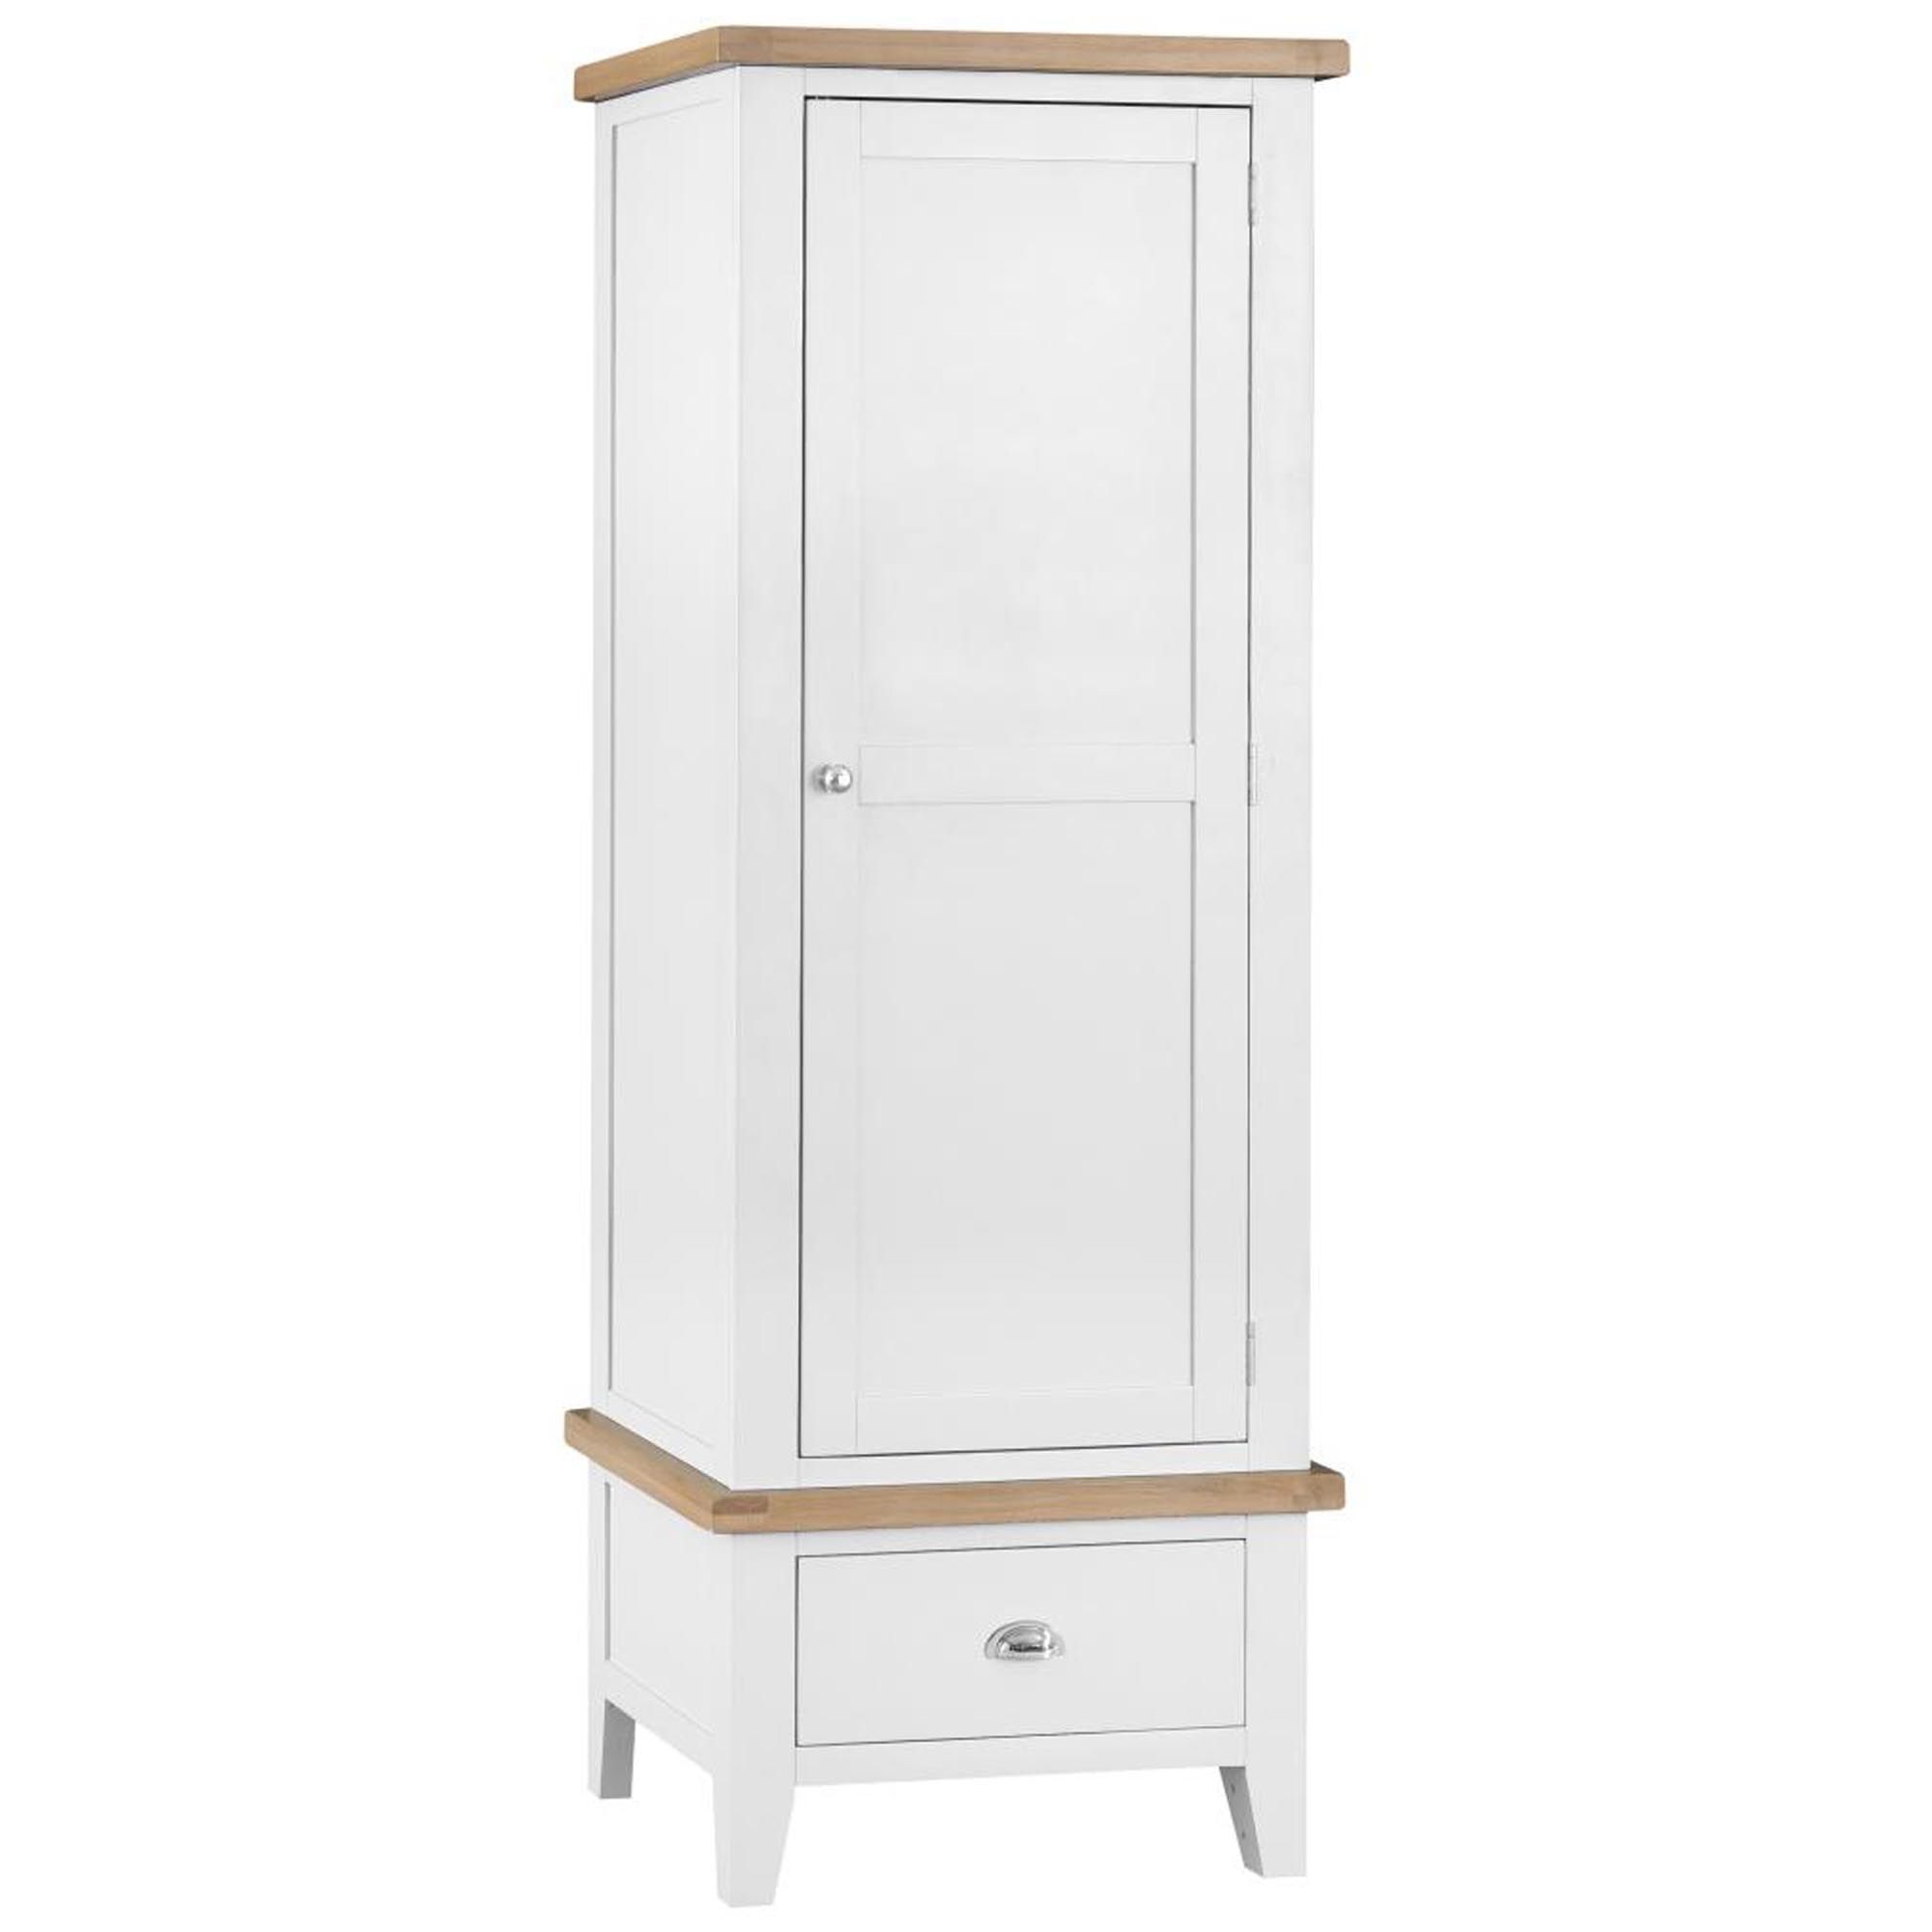 Trentino White Single Wardrobe | Bedroom Furniture | Homesdirect365 For White Single Door Wardrobes (View 12 of 15)